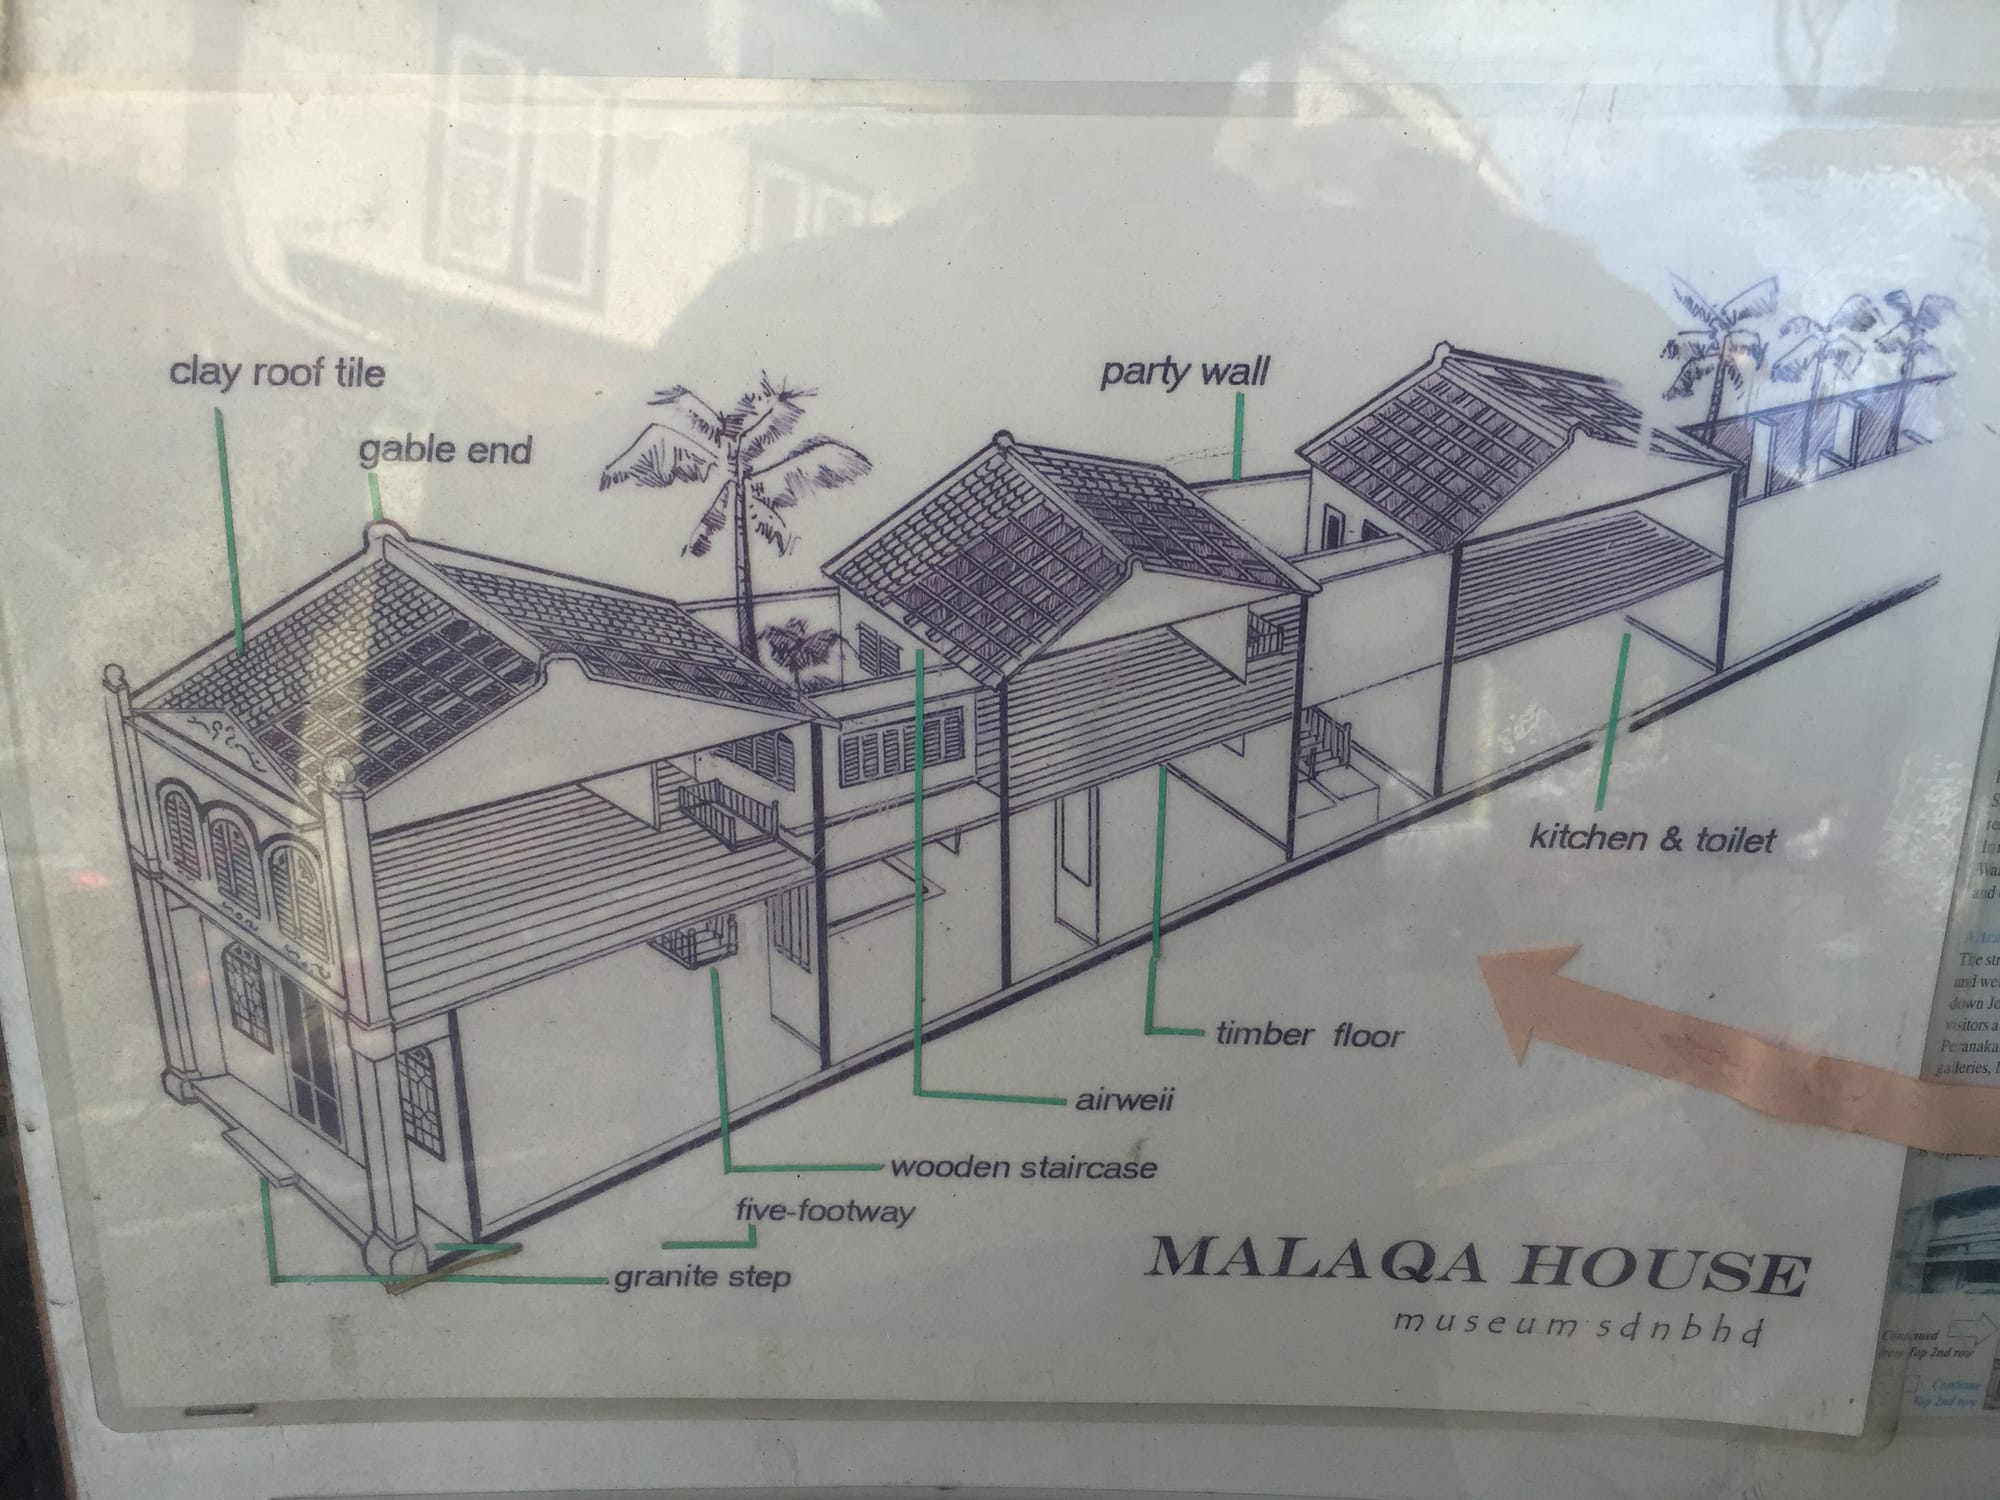 Photo by Author — plan of Malaqa House, Malacca, Malaysia